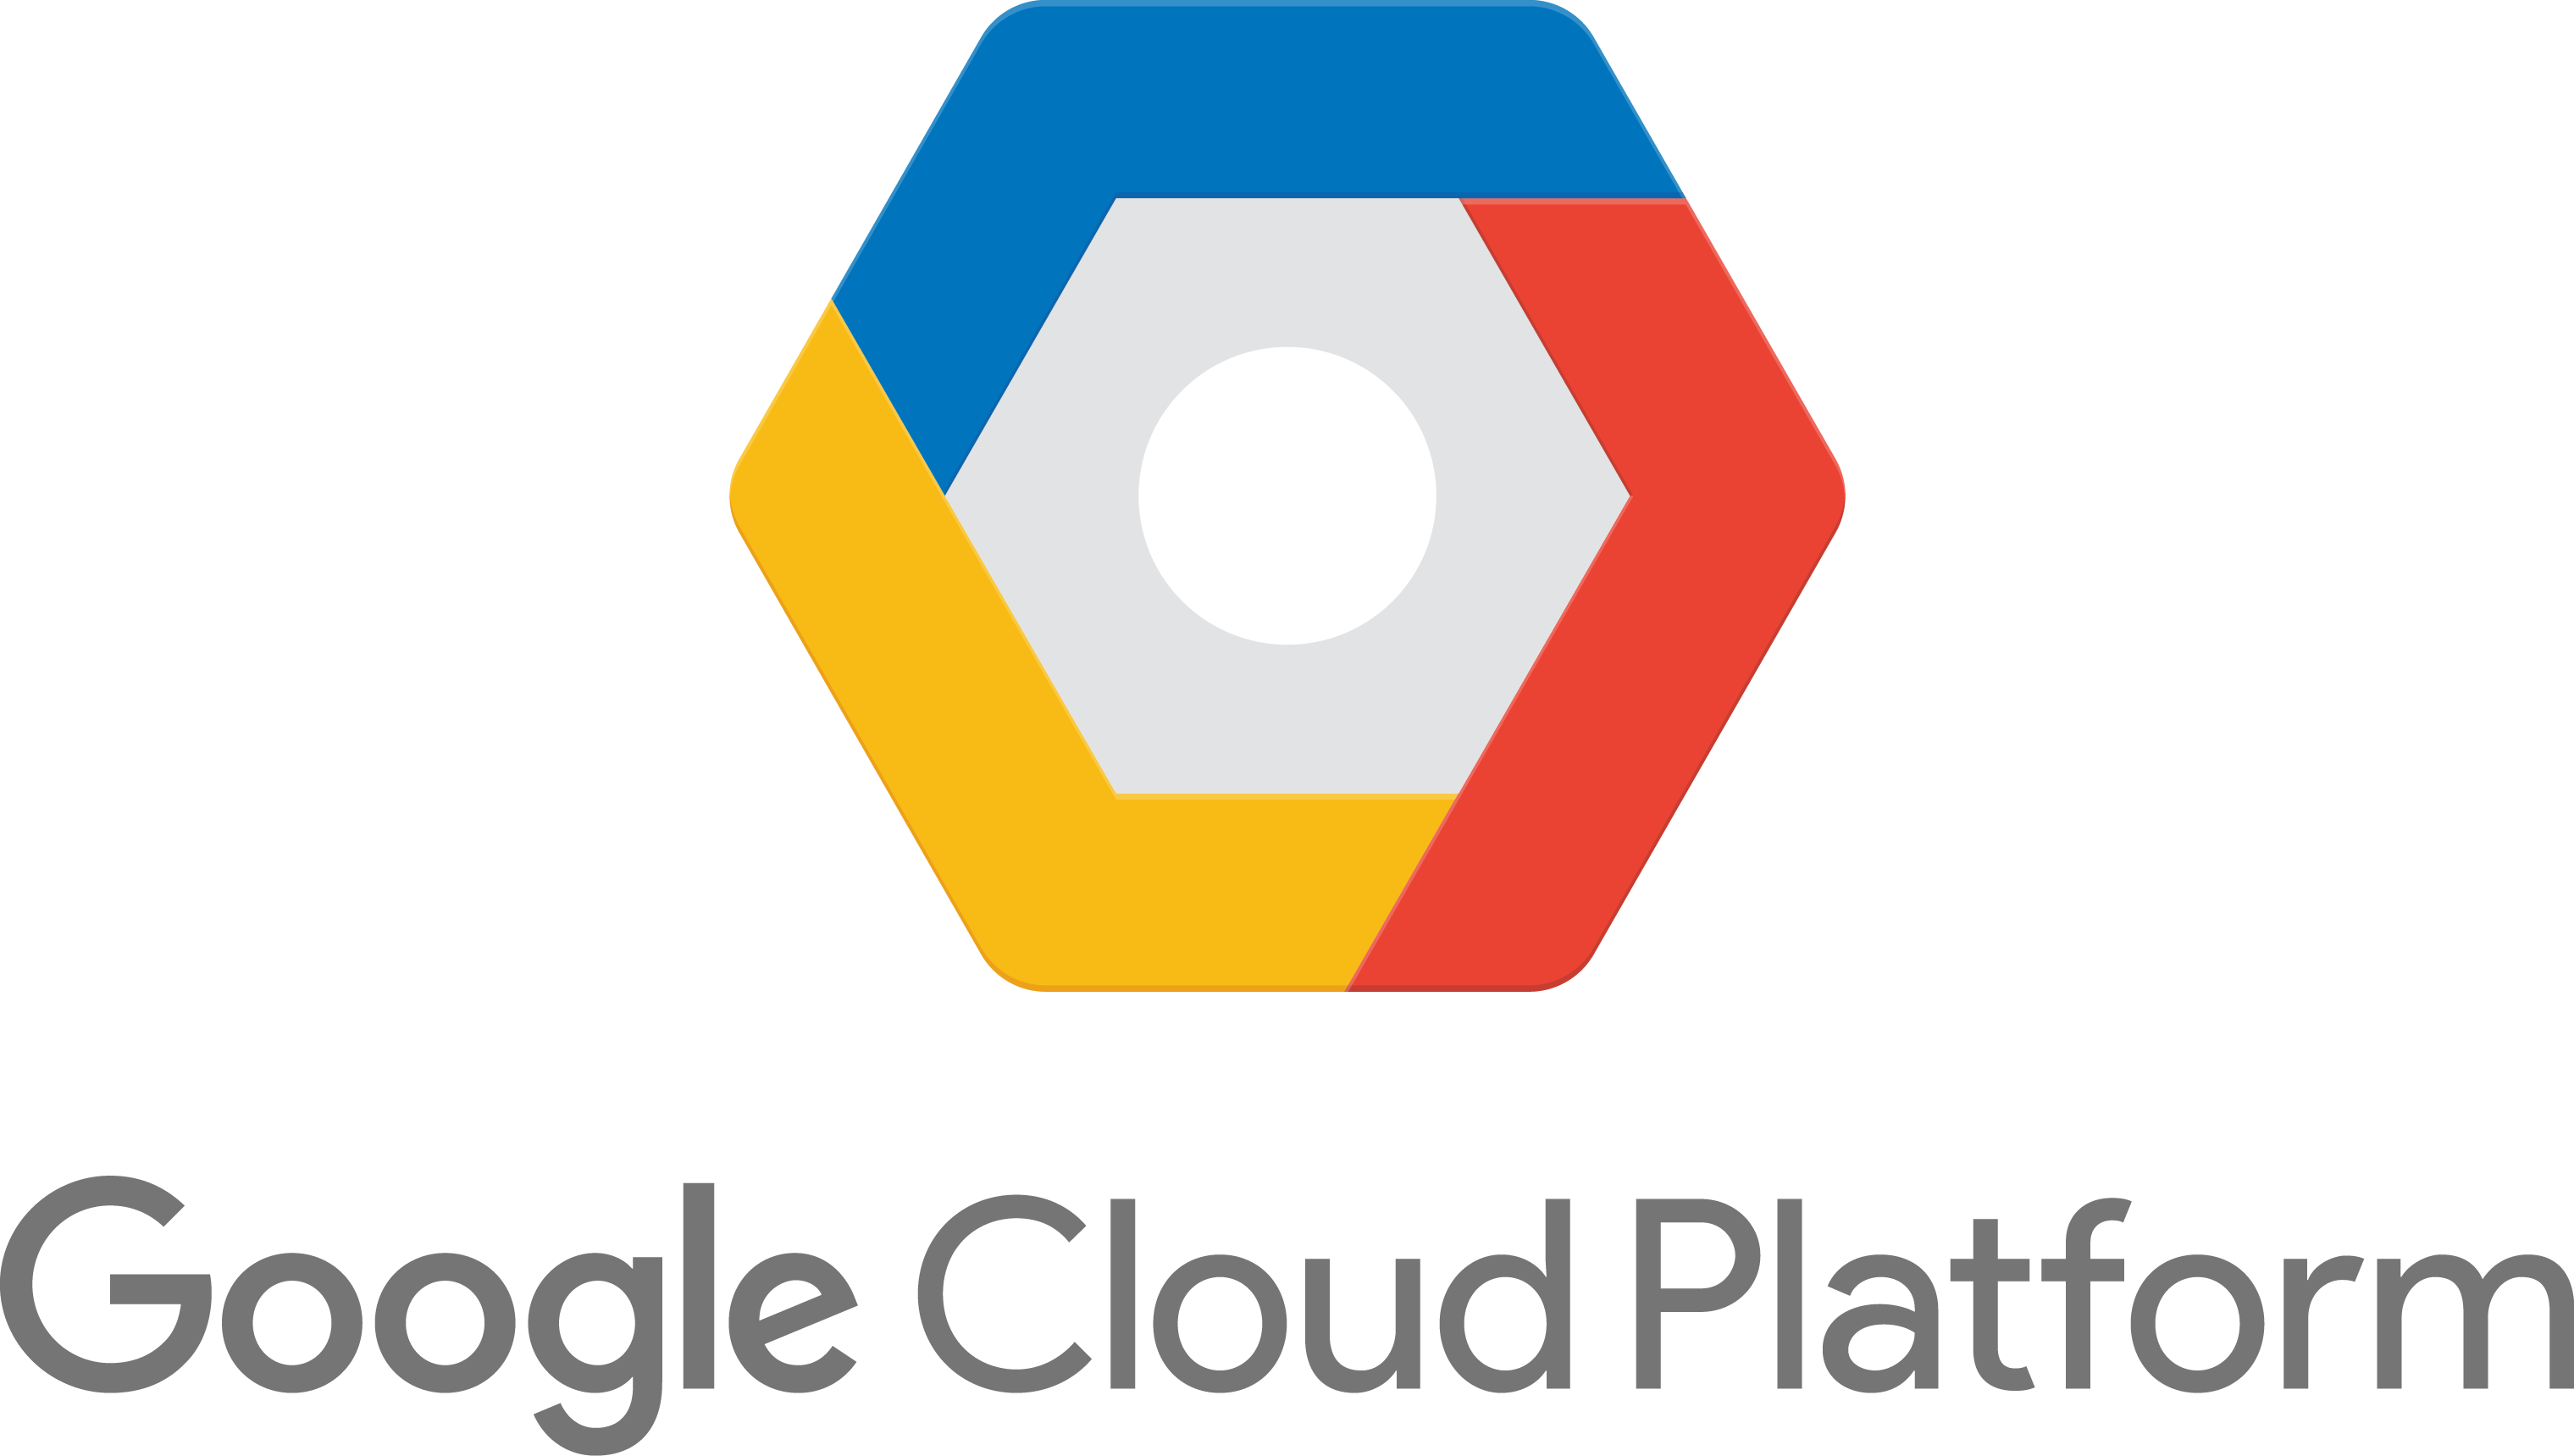 google-cloud-logo-png-img-google-cloud-platform-logo-google-cloud-logo-svg-full-3039x1719